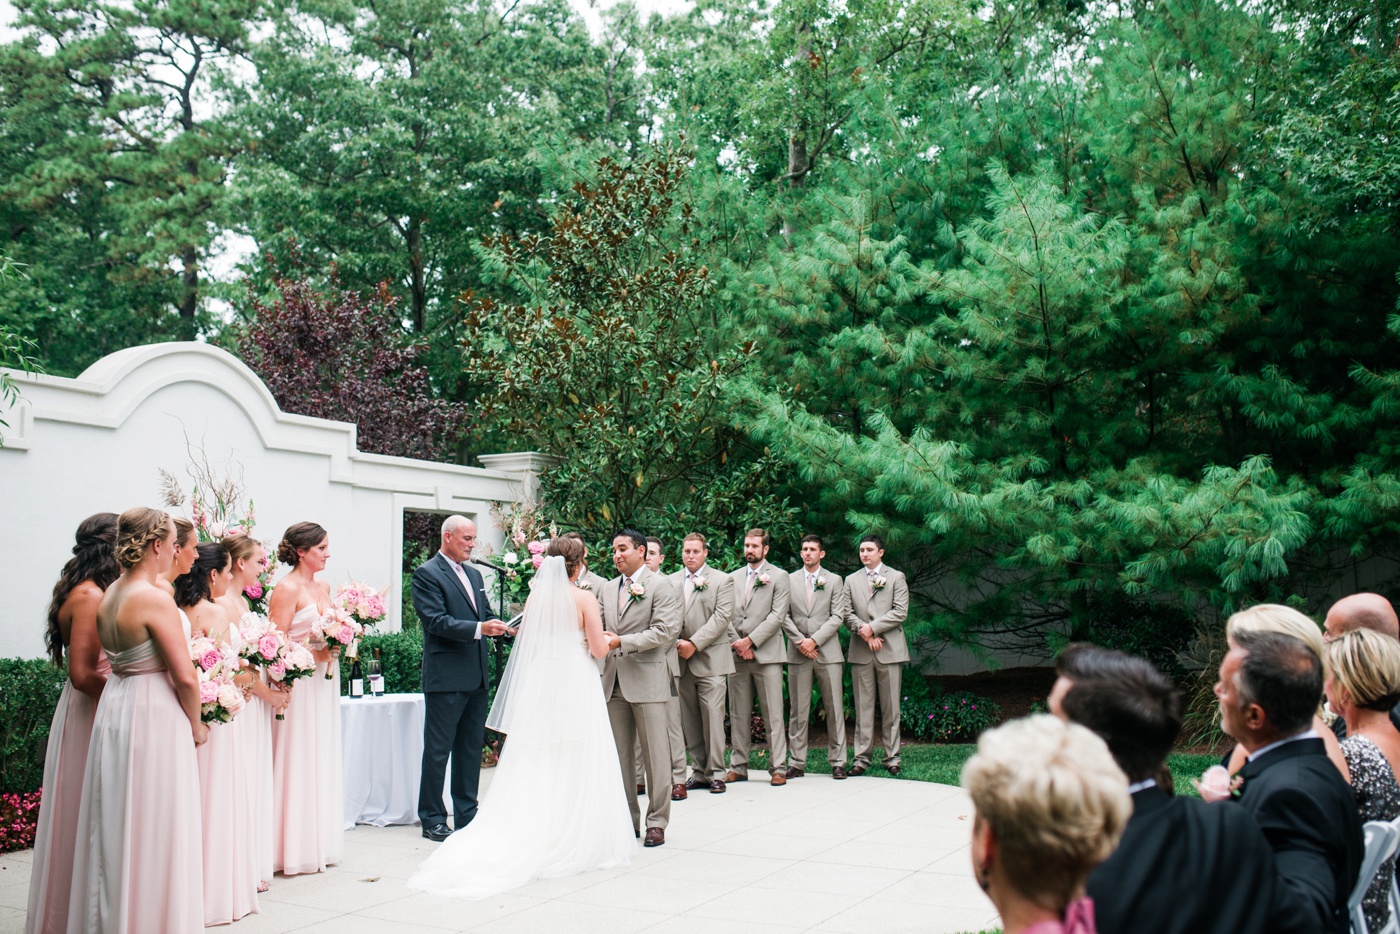 Amanda + Ruben - The Carriage House Wedding - Galloway New Jersey Photographer - Alison Dunn Photography-43